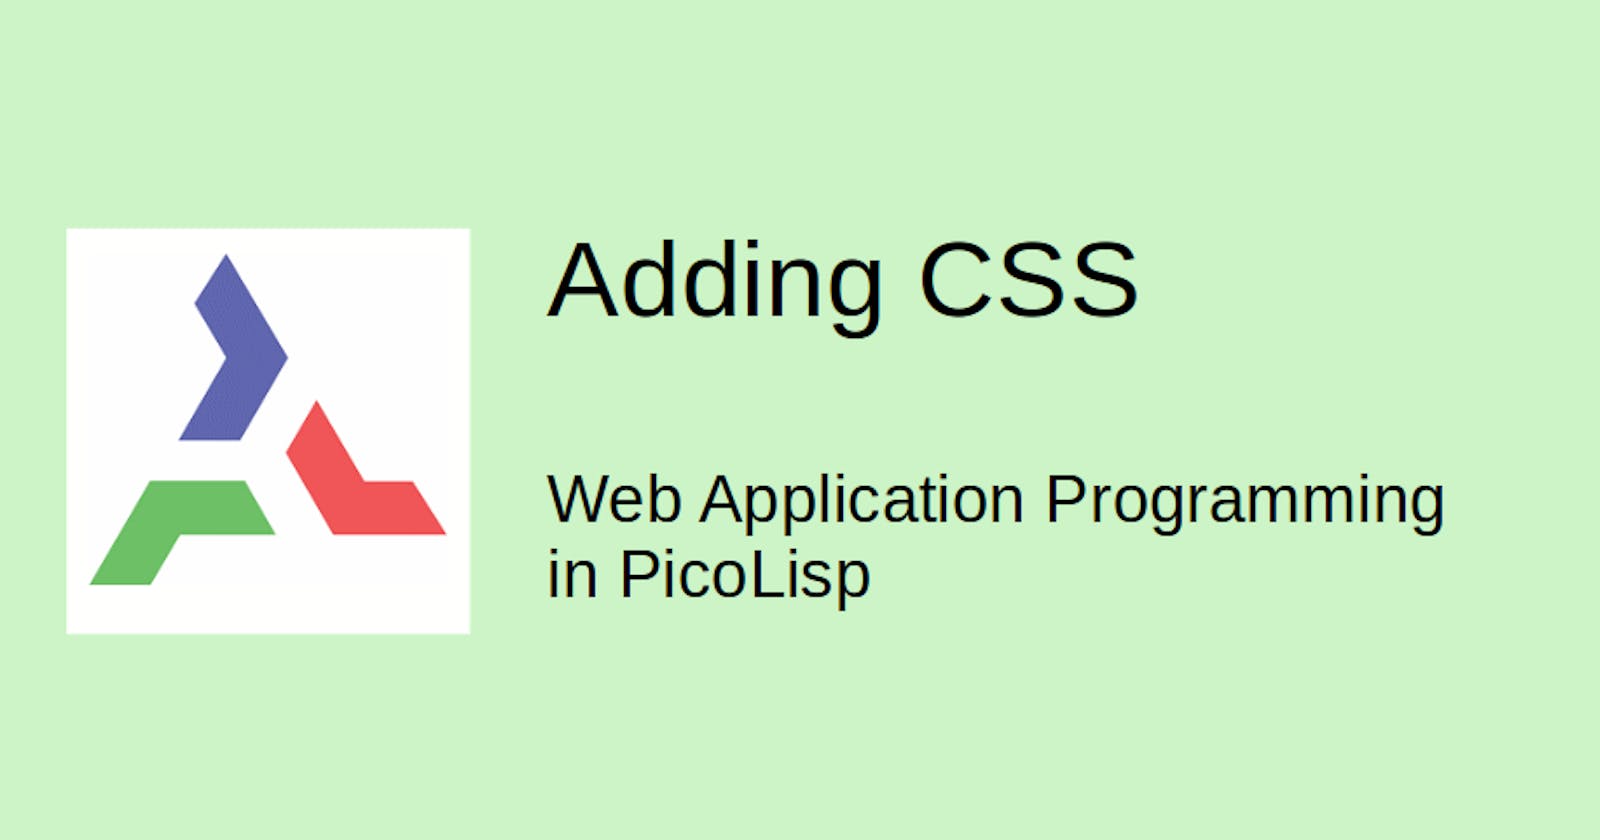 Web Application Programming in PicoLisp: Adding CSS